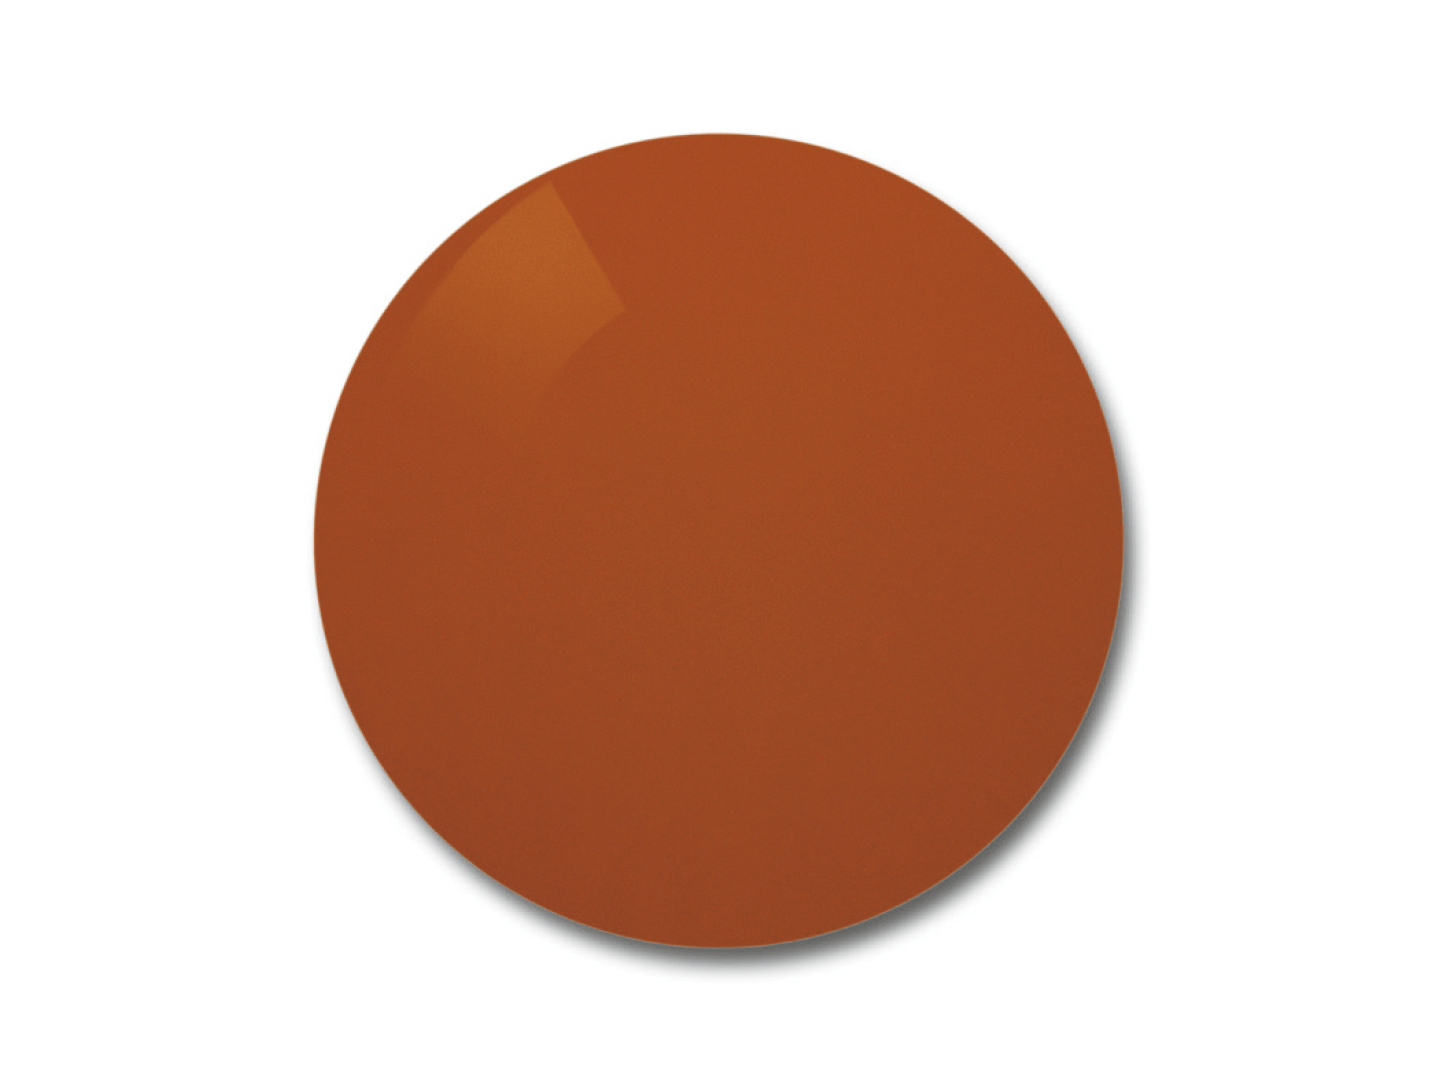 Colour example of the Skylet® Fun lens tint. 